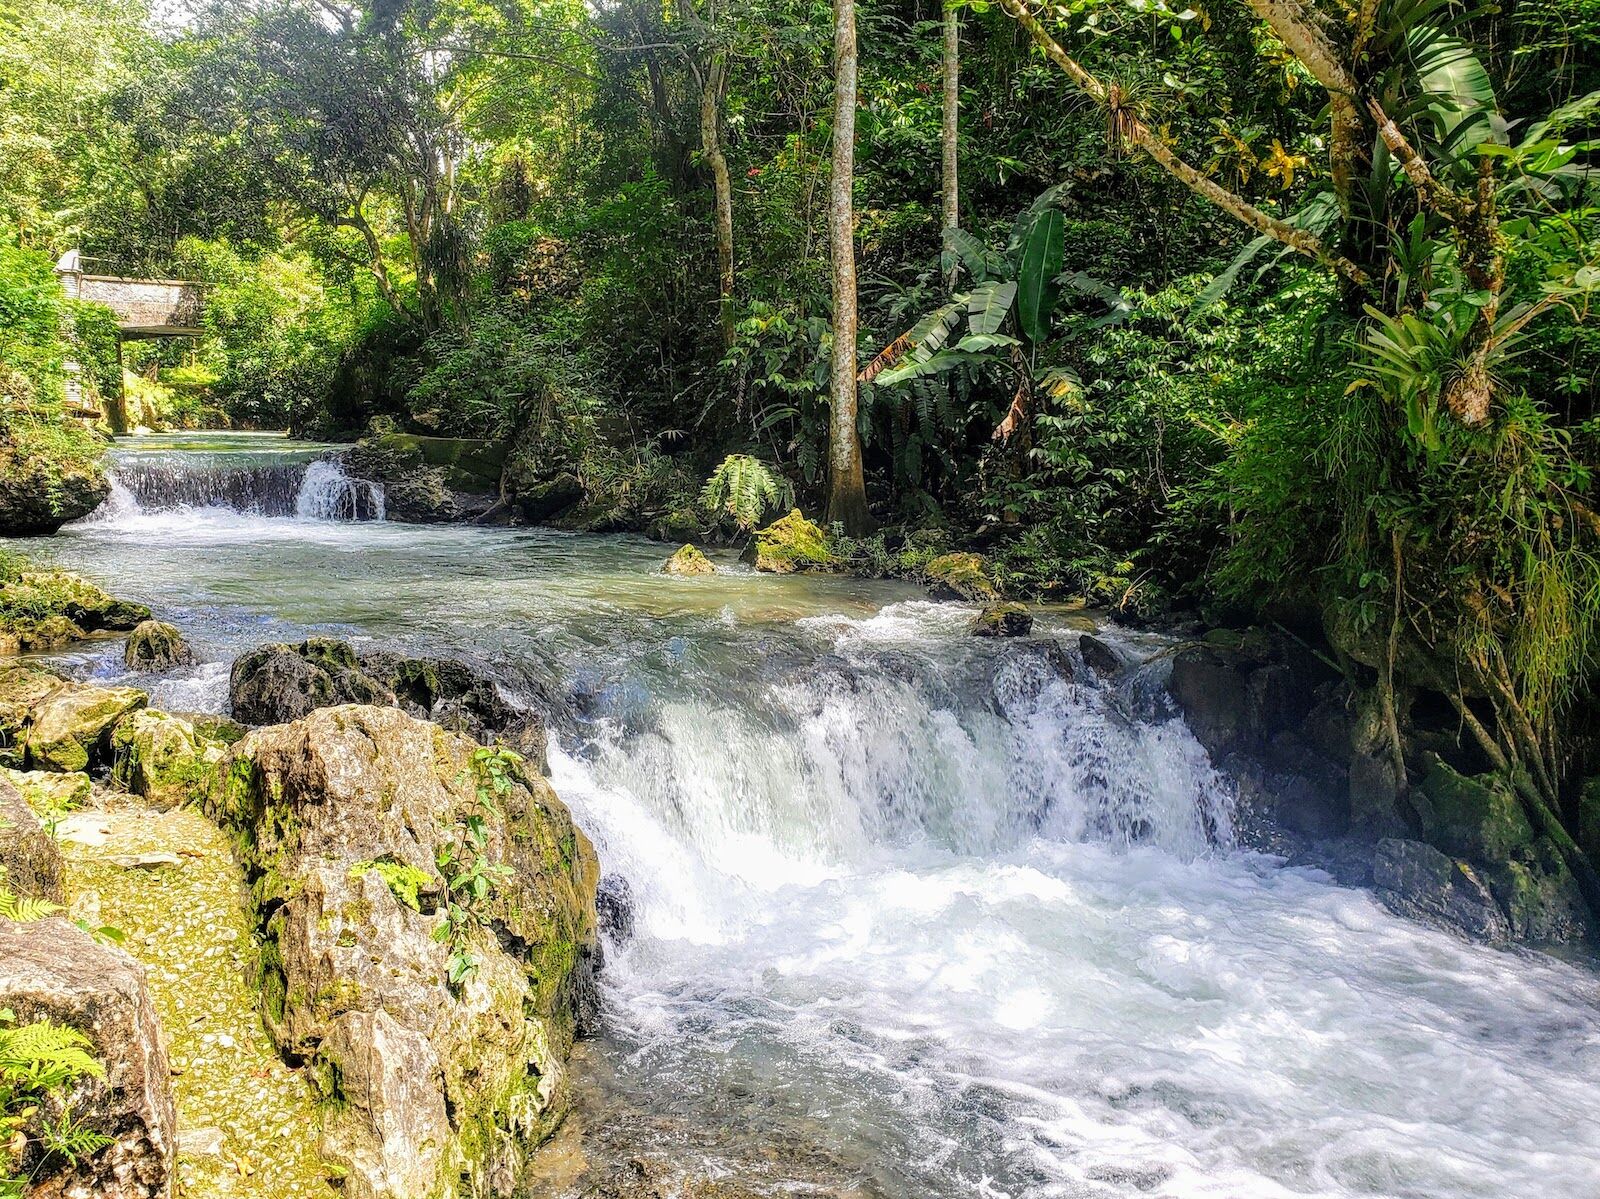 waterfalls in jamaica - noisy river falls